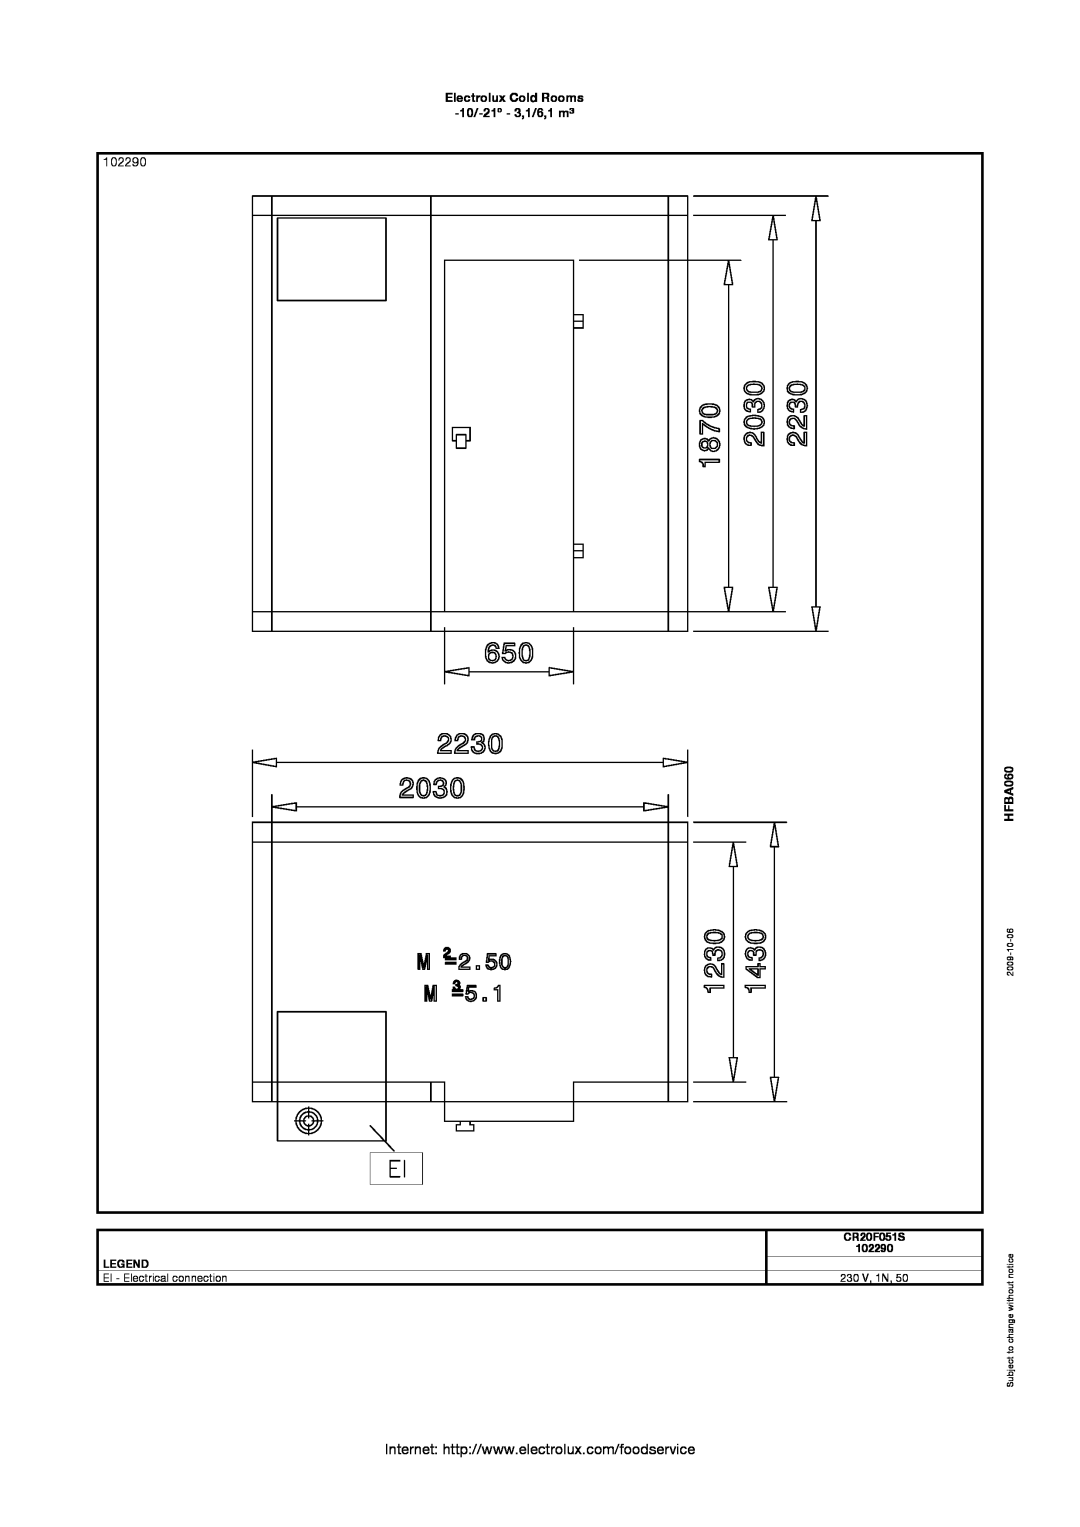 Electrolux 102290 Electrolux Cold Rooms 10/-21º - 3,1/6,1 m³, HFBA060, CR20F051S, EI - Electrical connection, 230 V, 1N 